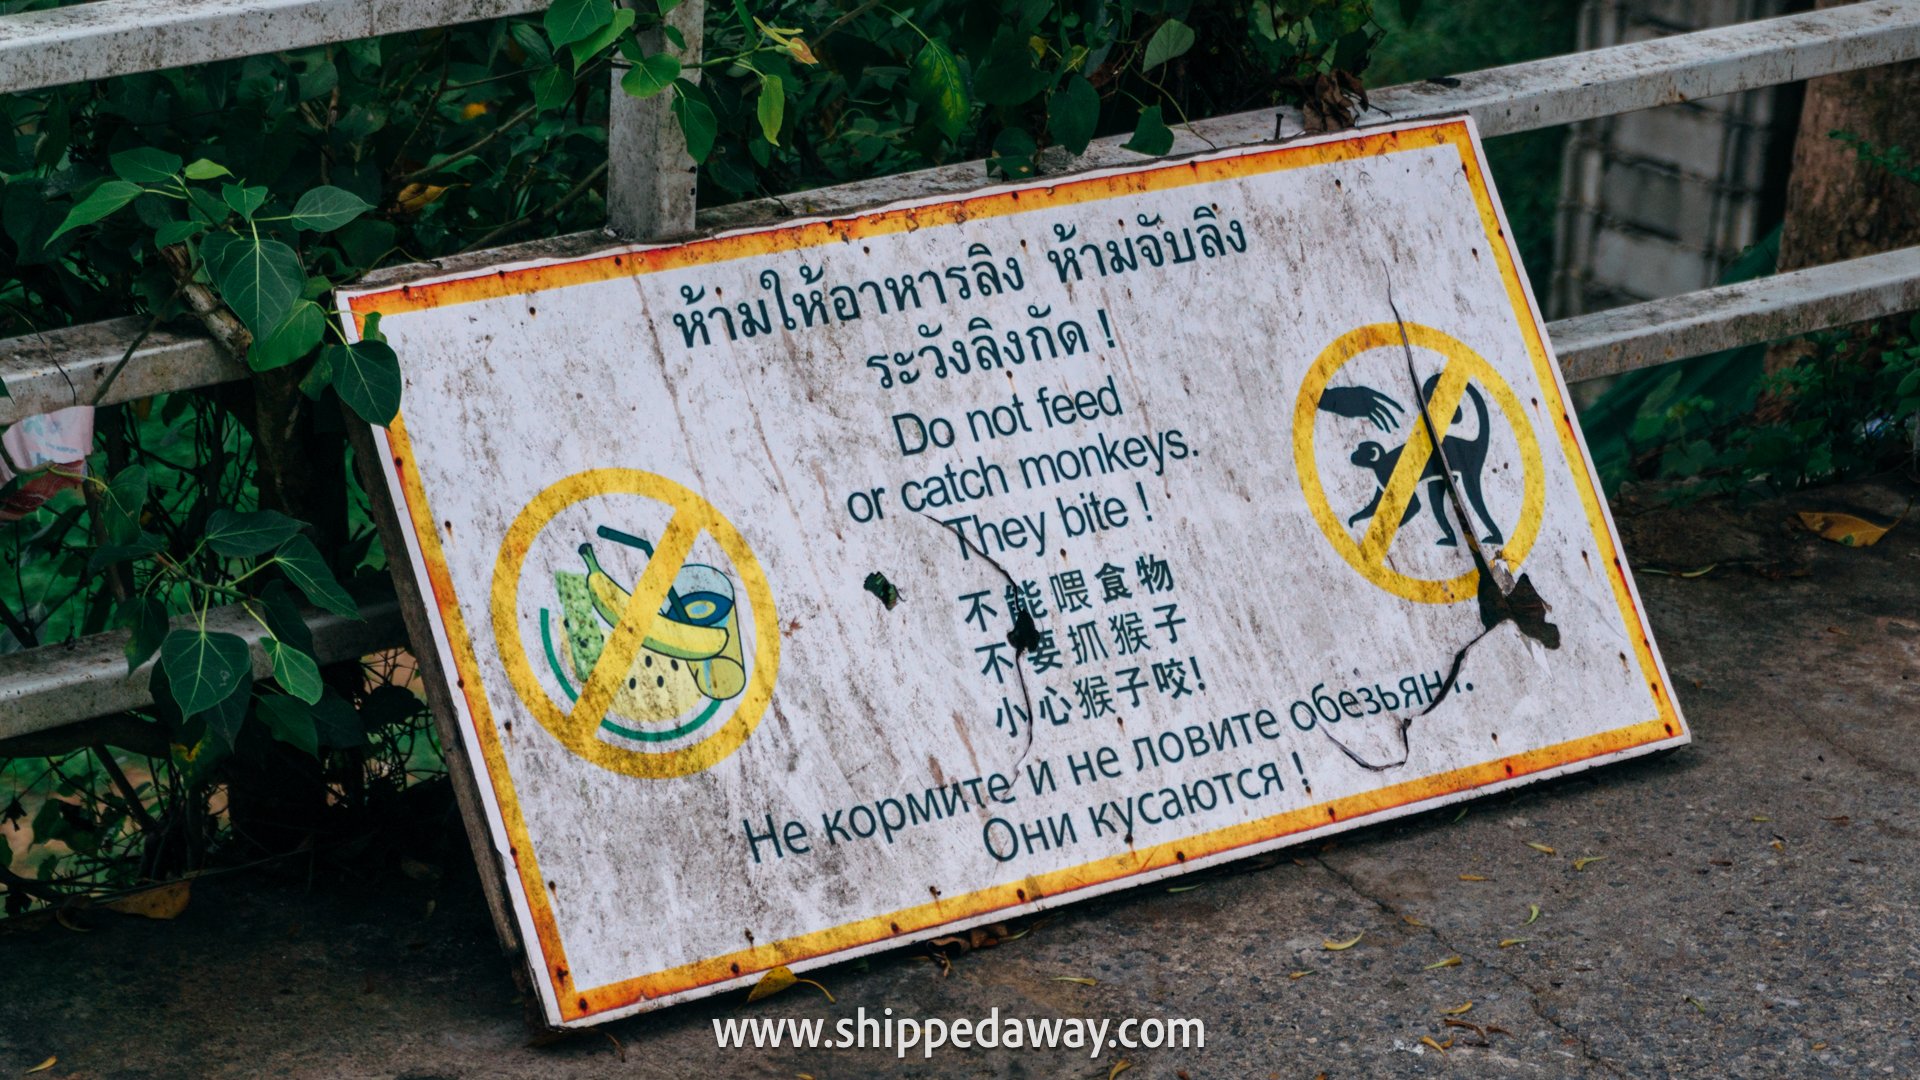 Monkeys warning sign at Big Buddha, Phuket, Thailand